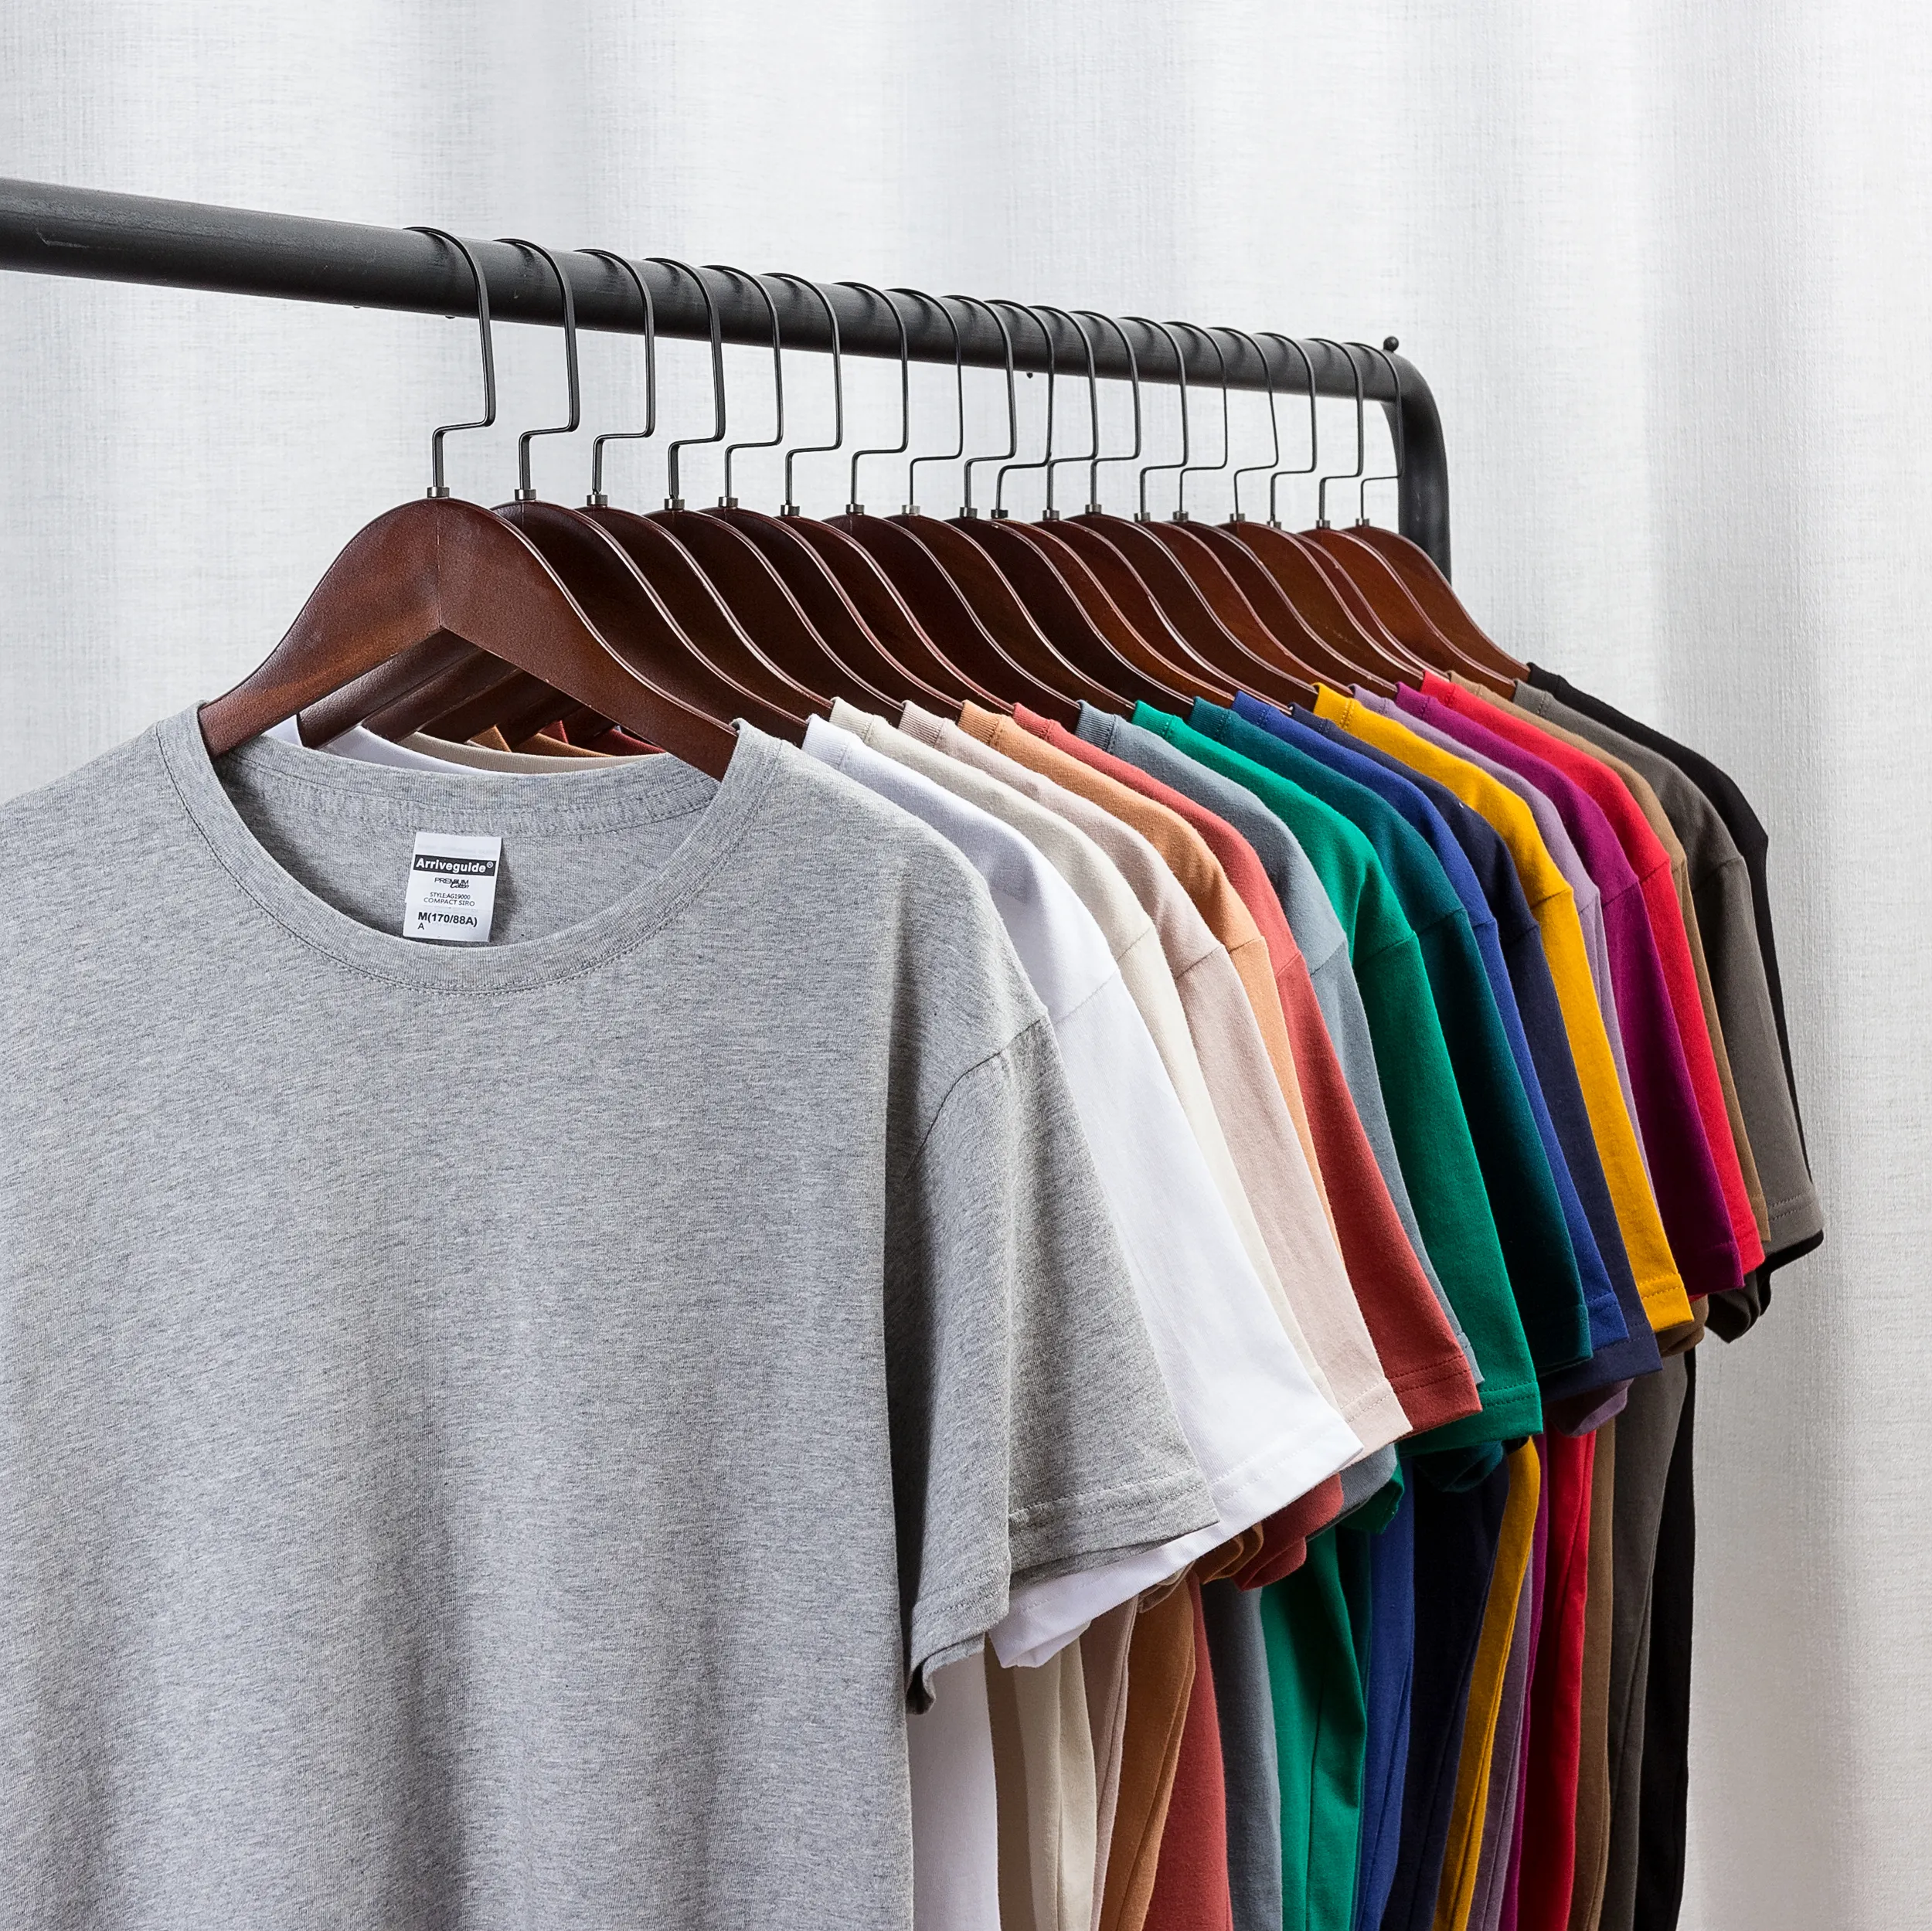 High Quality 100% Cotton Oversized Tshirt Plain Blank Custom Plus Size Men's T-shirts